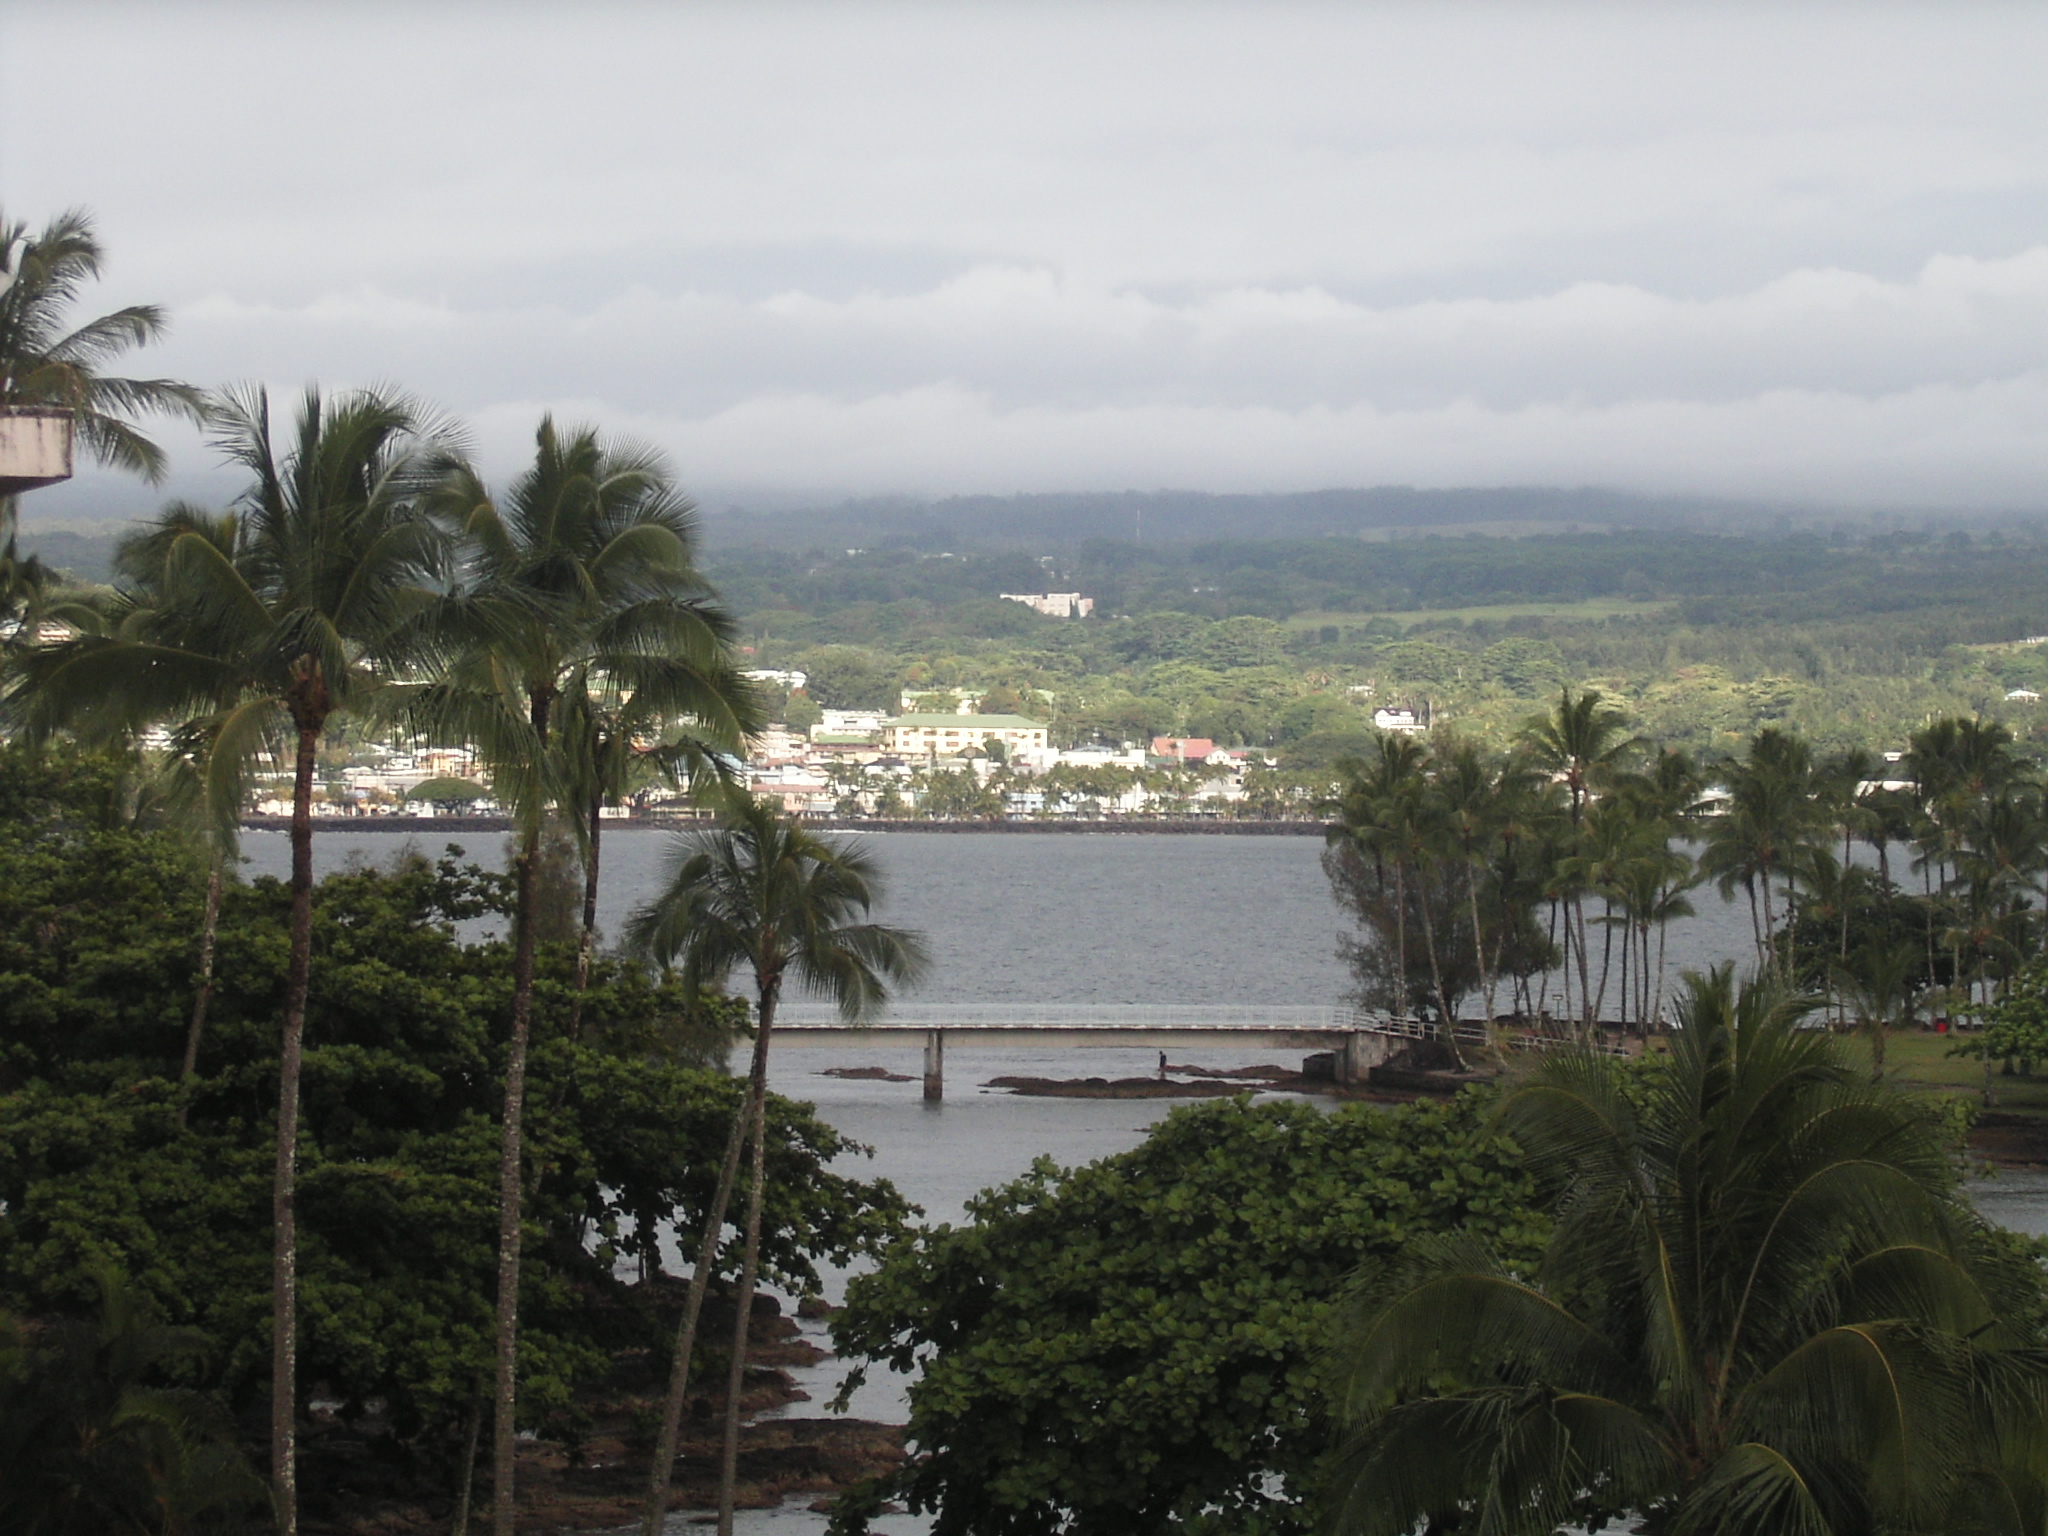 View from the hotel towards mauna kea